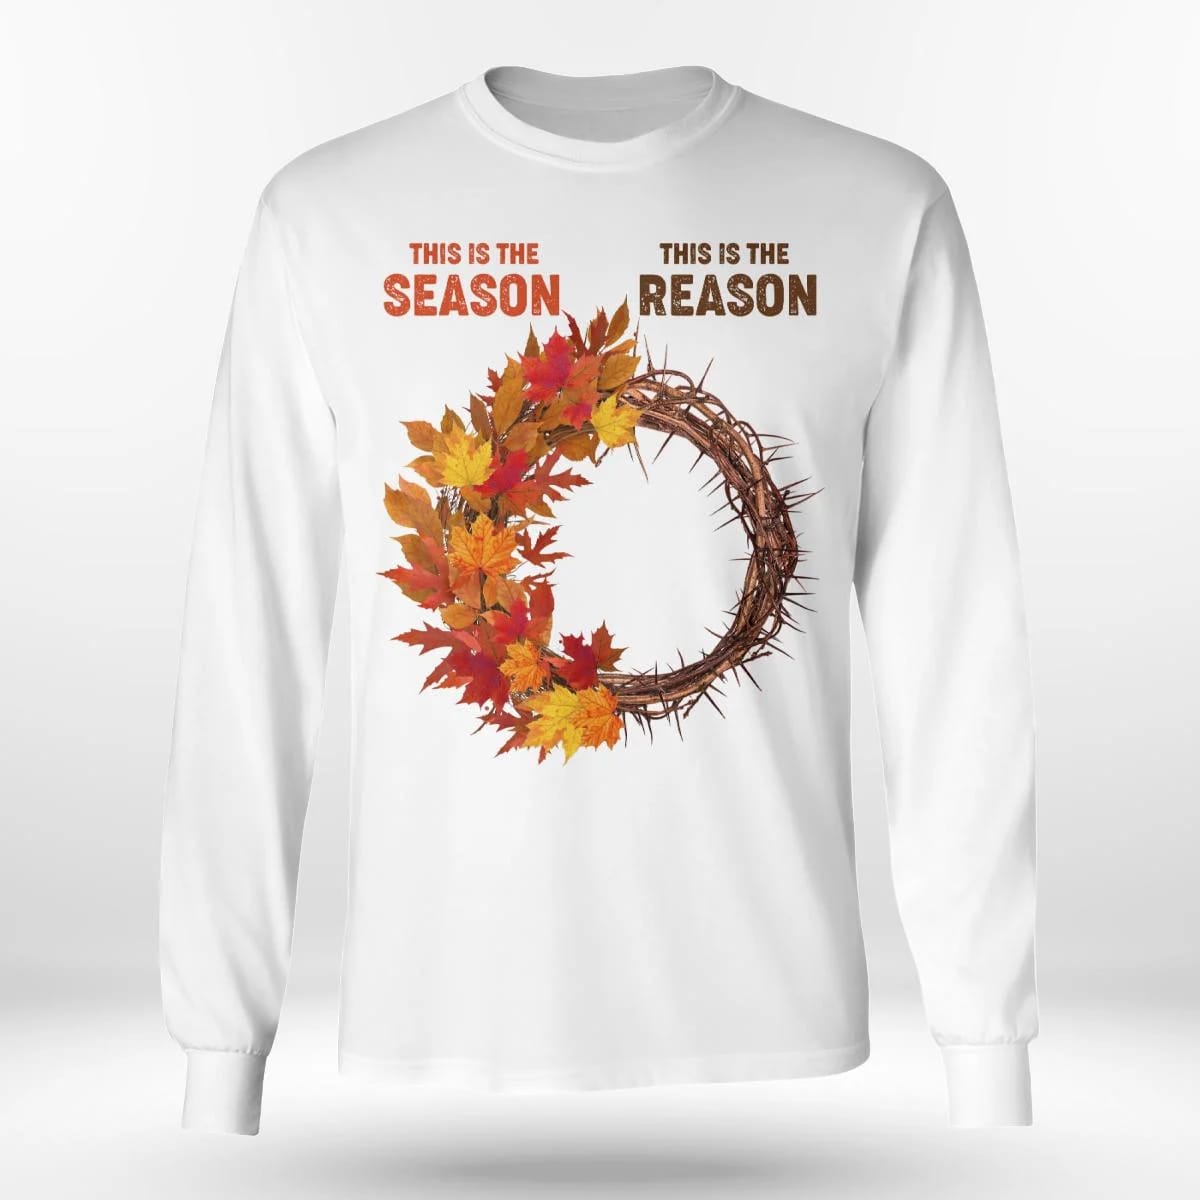 This Is The Season, This Is The Reason, Fall Leaves, Crown Of Thorns, Jesus Sweatshirt Hoodie, God T-Shirt, Faith T-Shirt